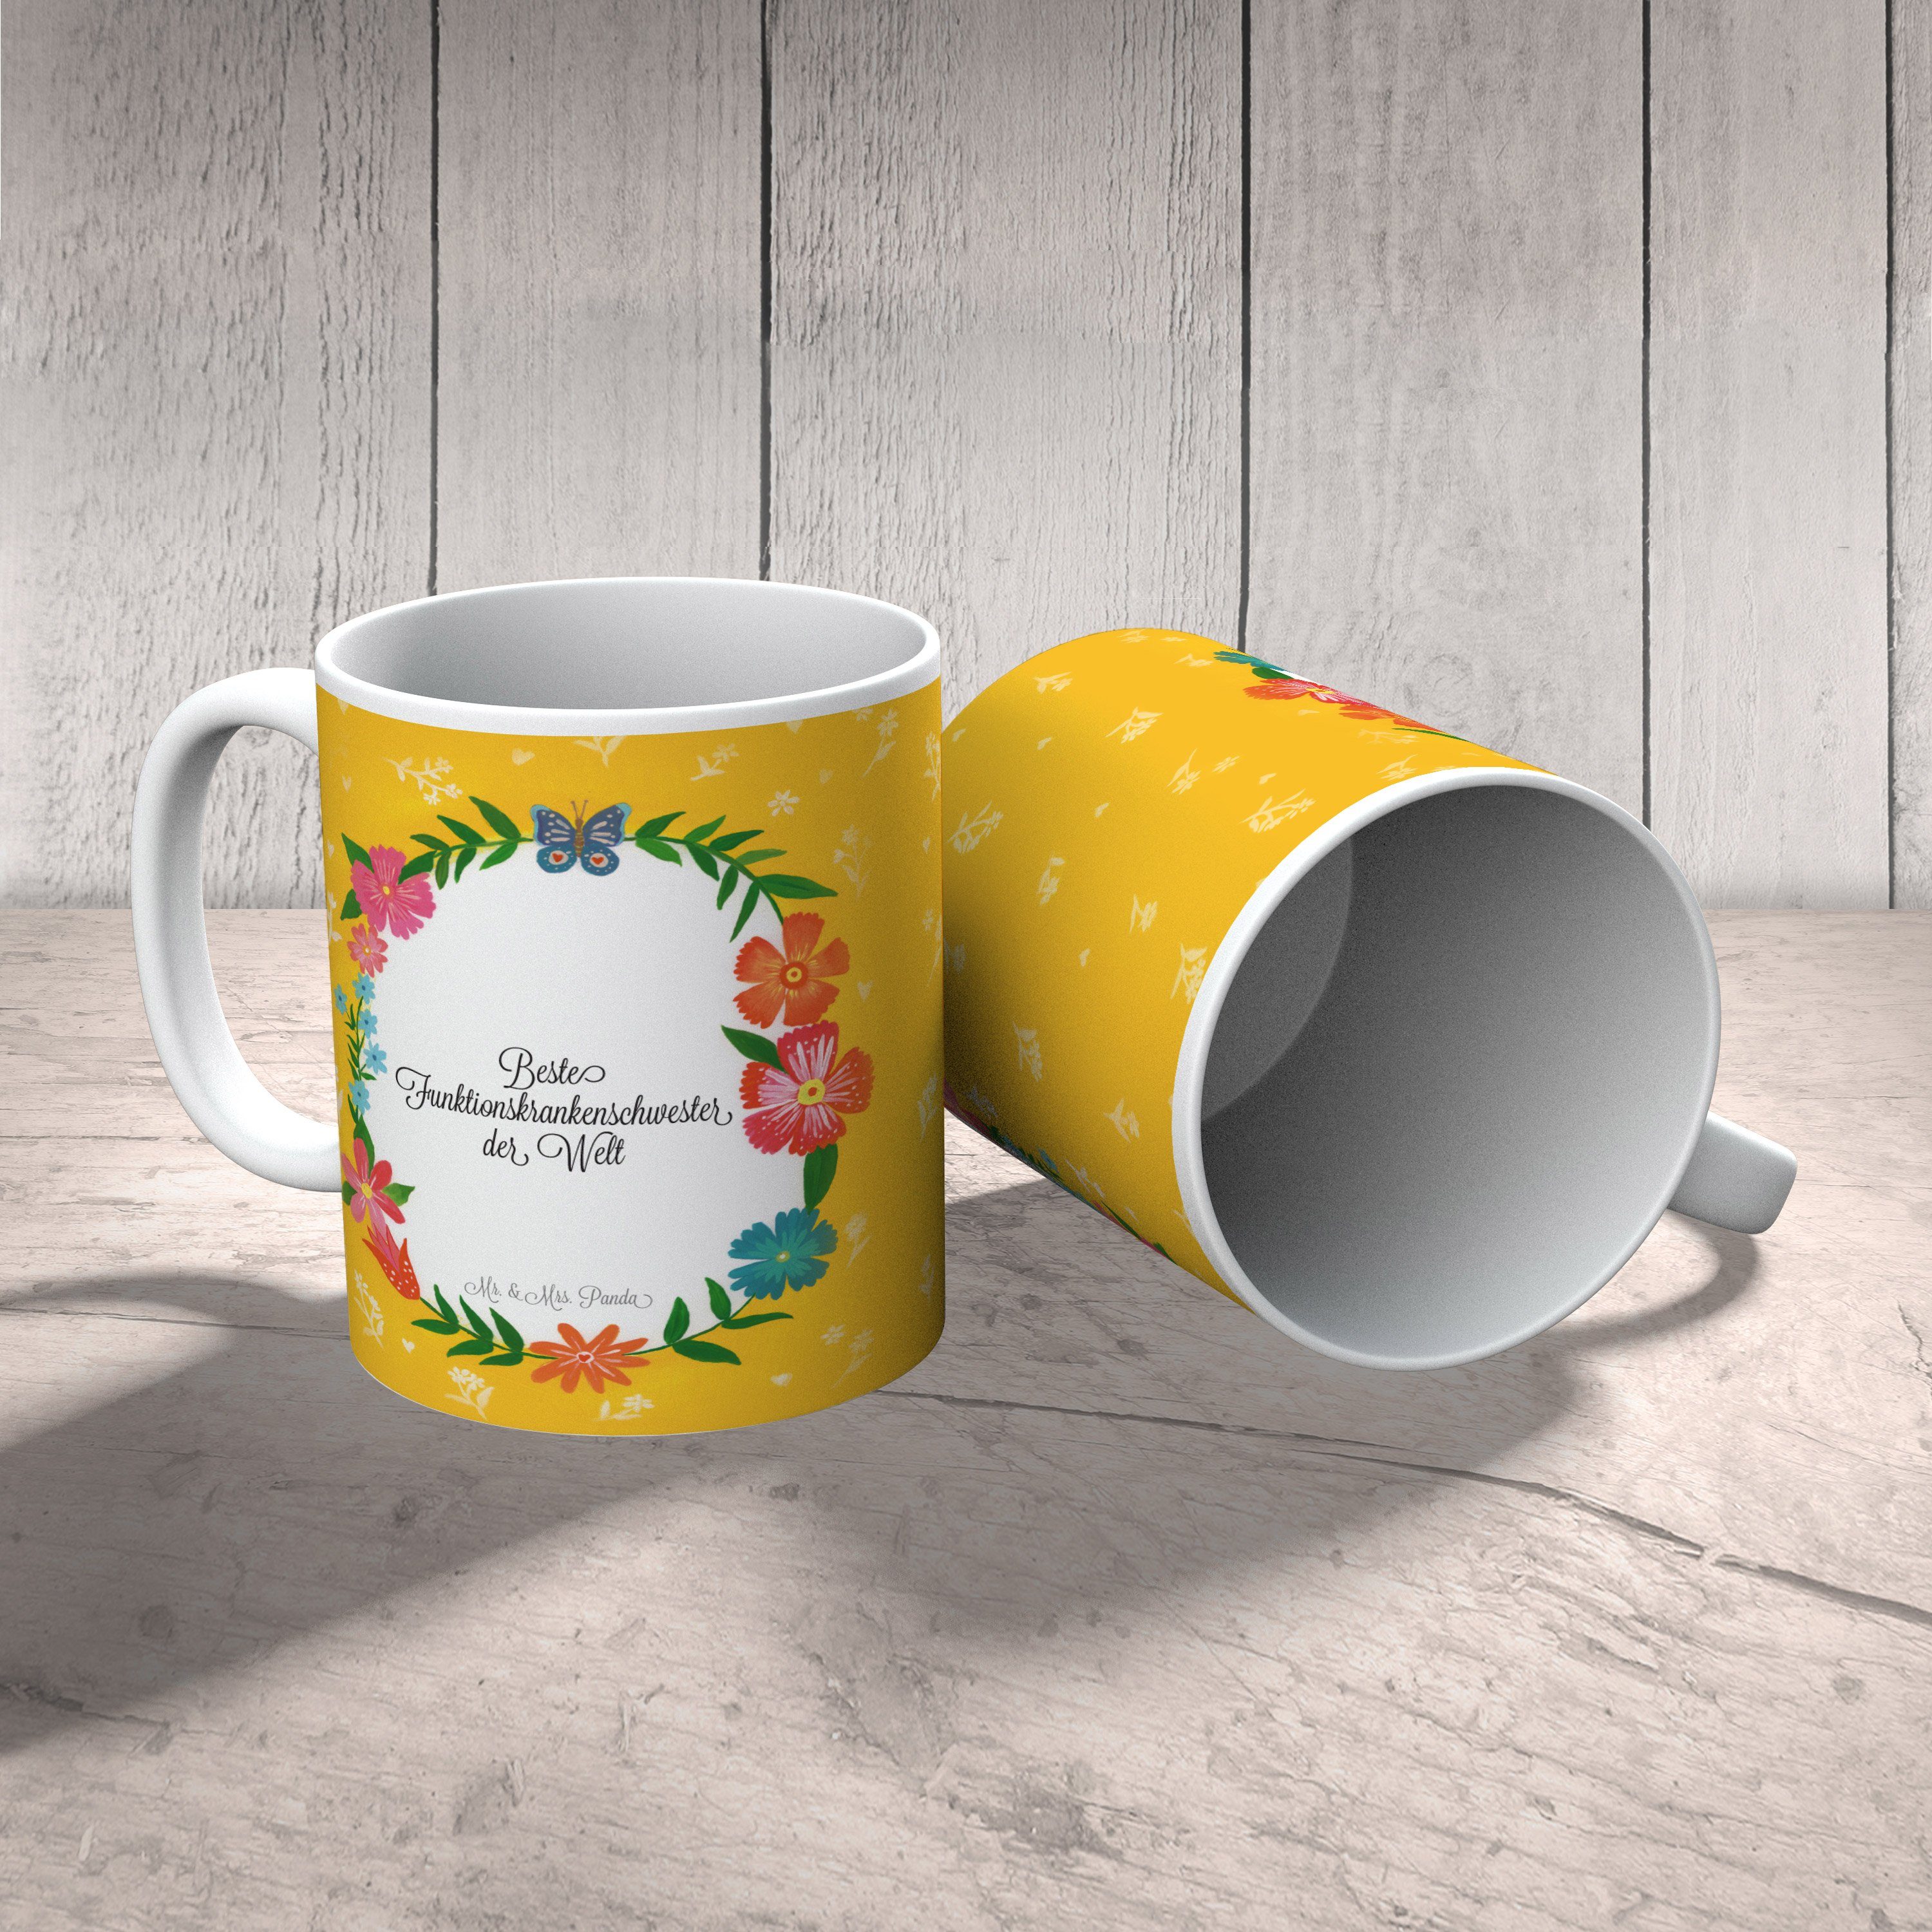 Mr. & Mrs. Geschenk, - Keramikt, Panda Keramik Tasse Funktionskrankenschwester Abschied, Kaffeetasse